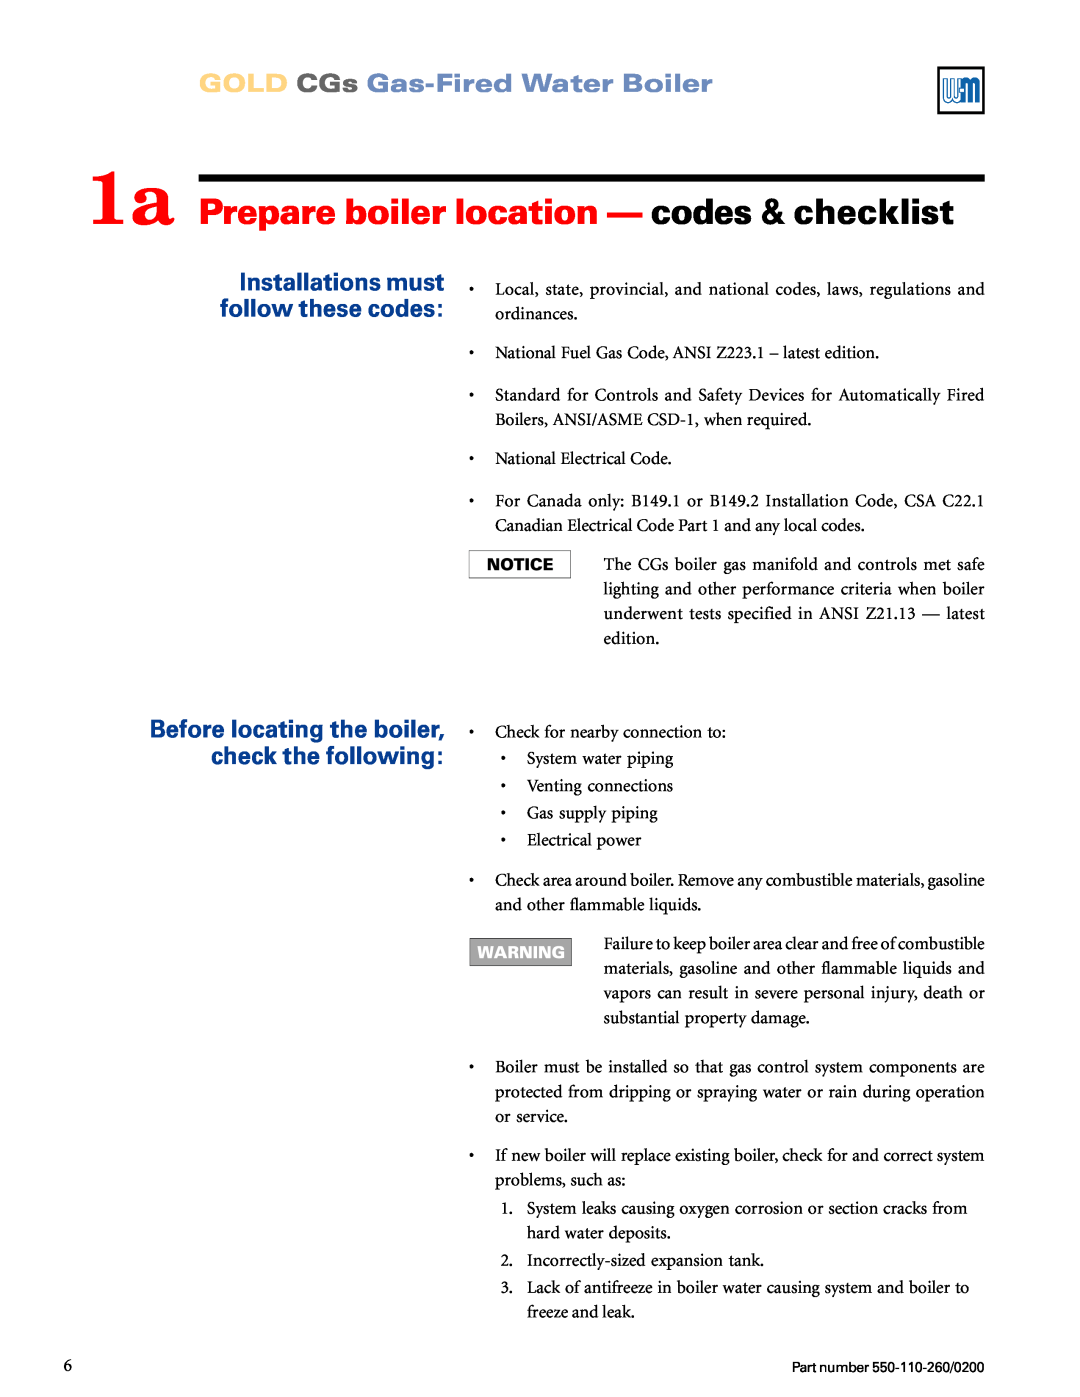 Weil-McLain 550-110-260/02002 manual 1a Prepare boiler location — codes & checklist, GOLD CGs Gas-FiredWater Boiler 